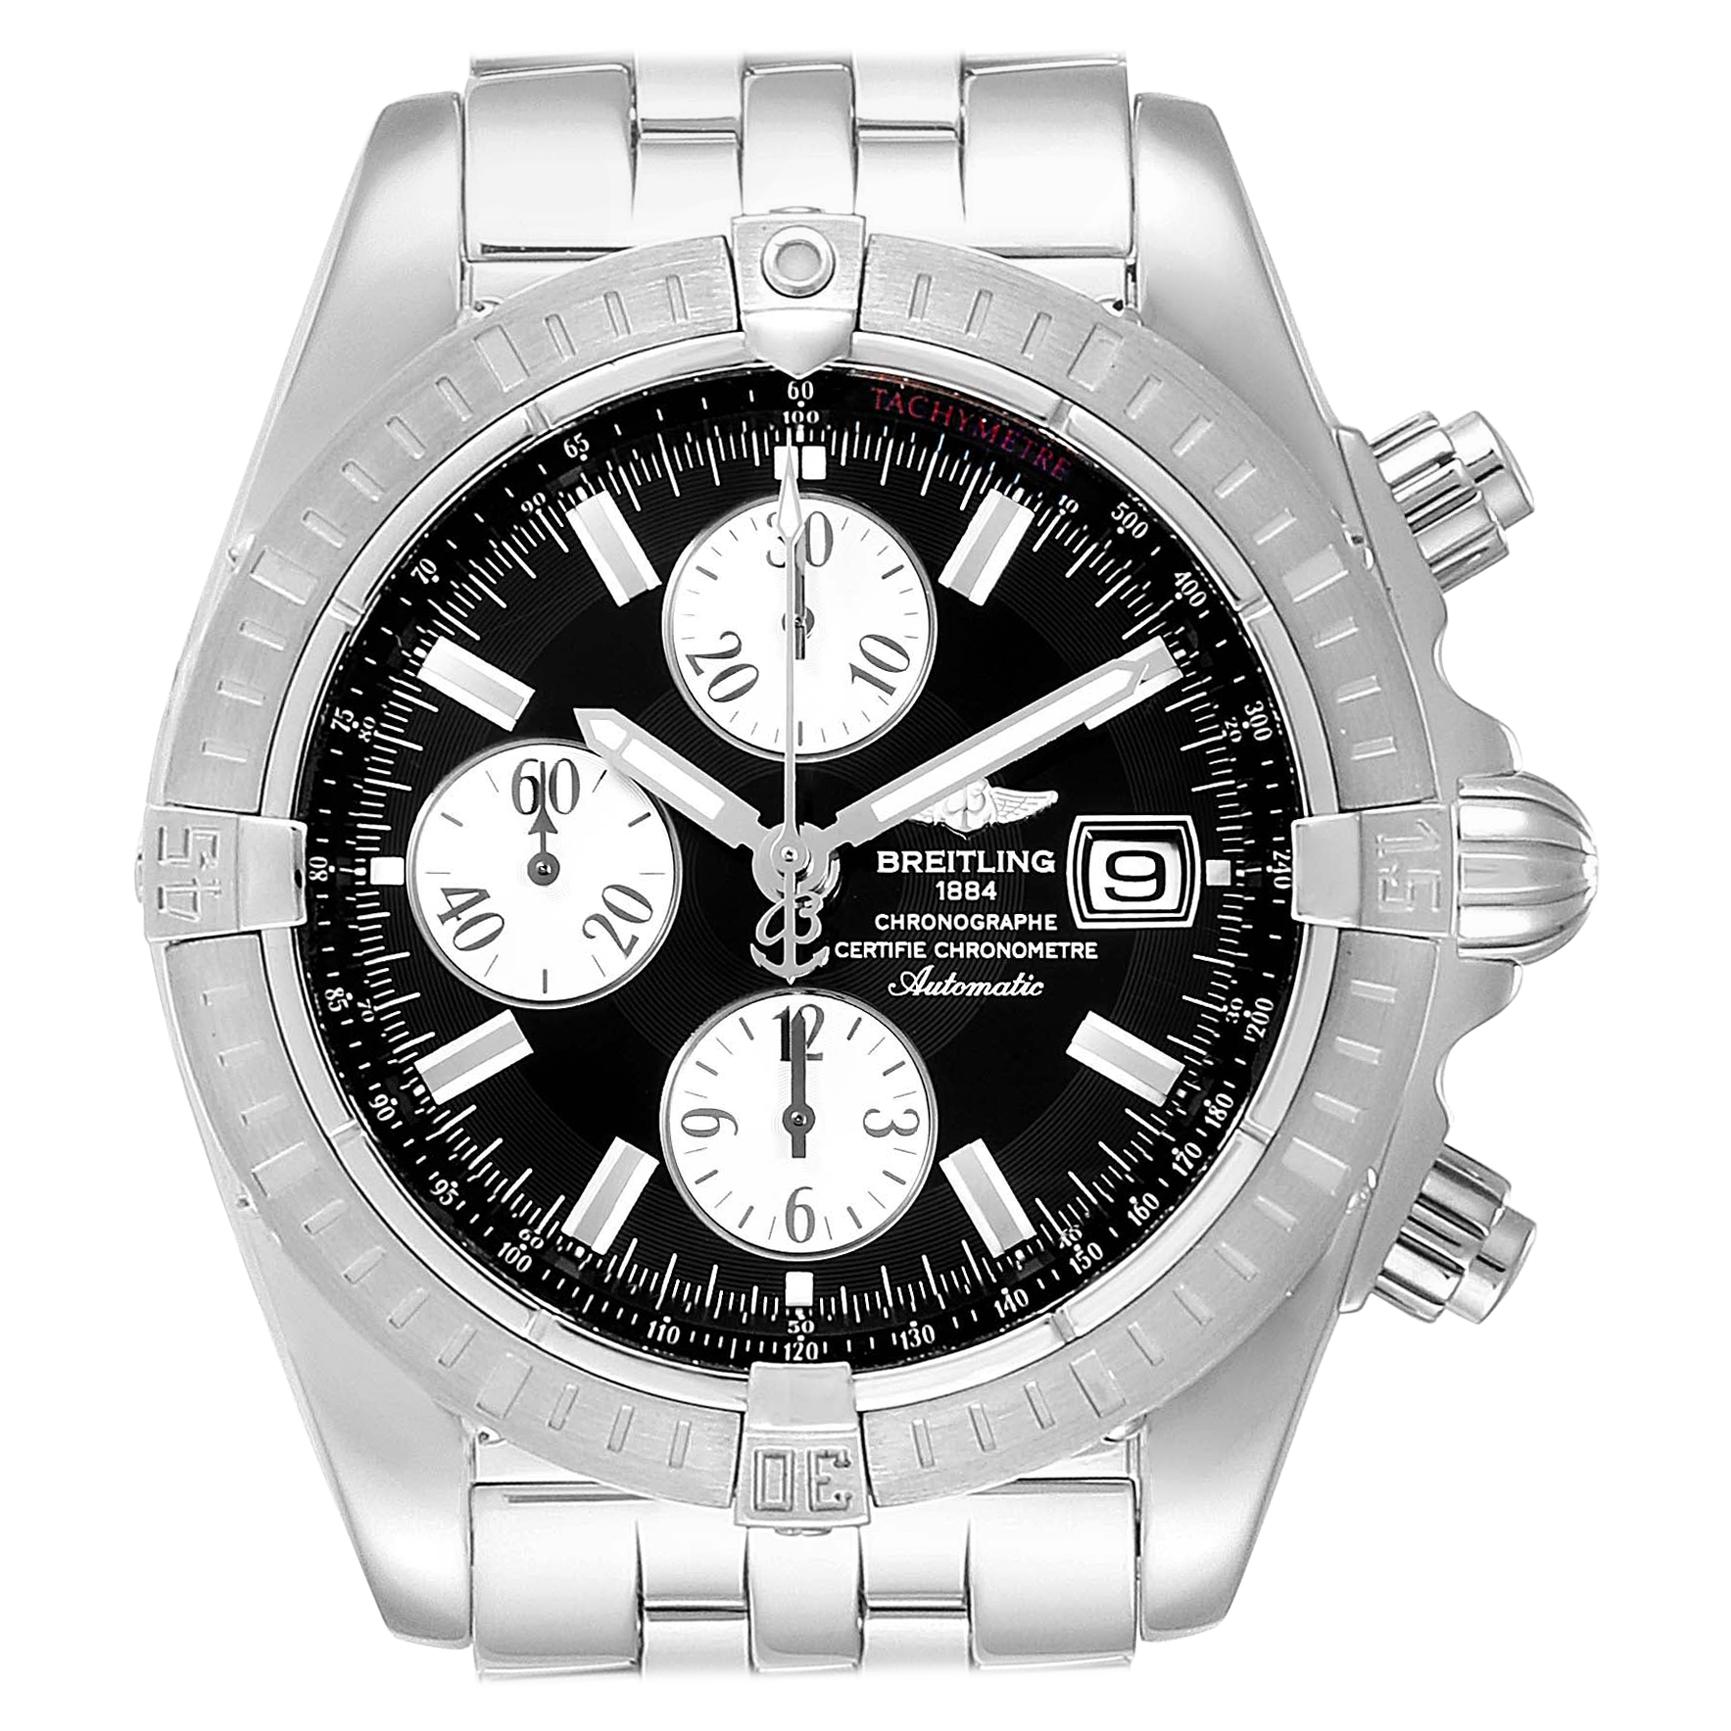 Breitling Chronomat Evolution Steel Black Dial Steel Men's Watch A13356